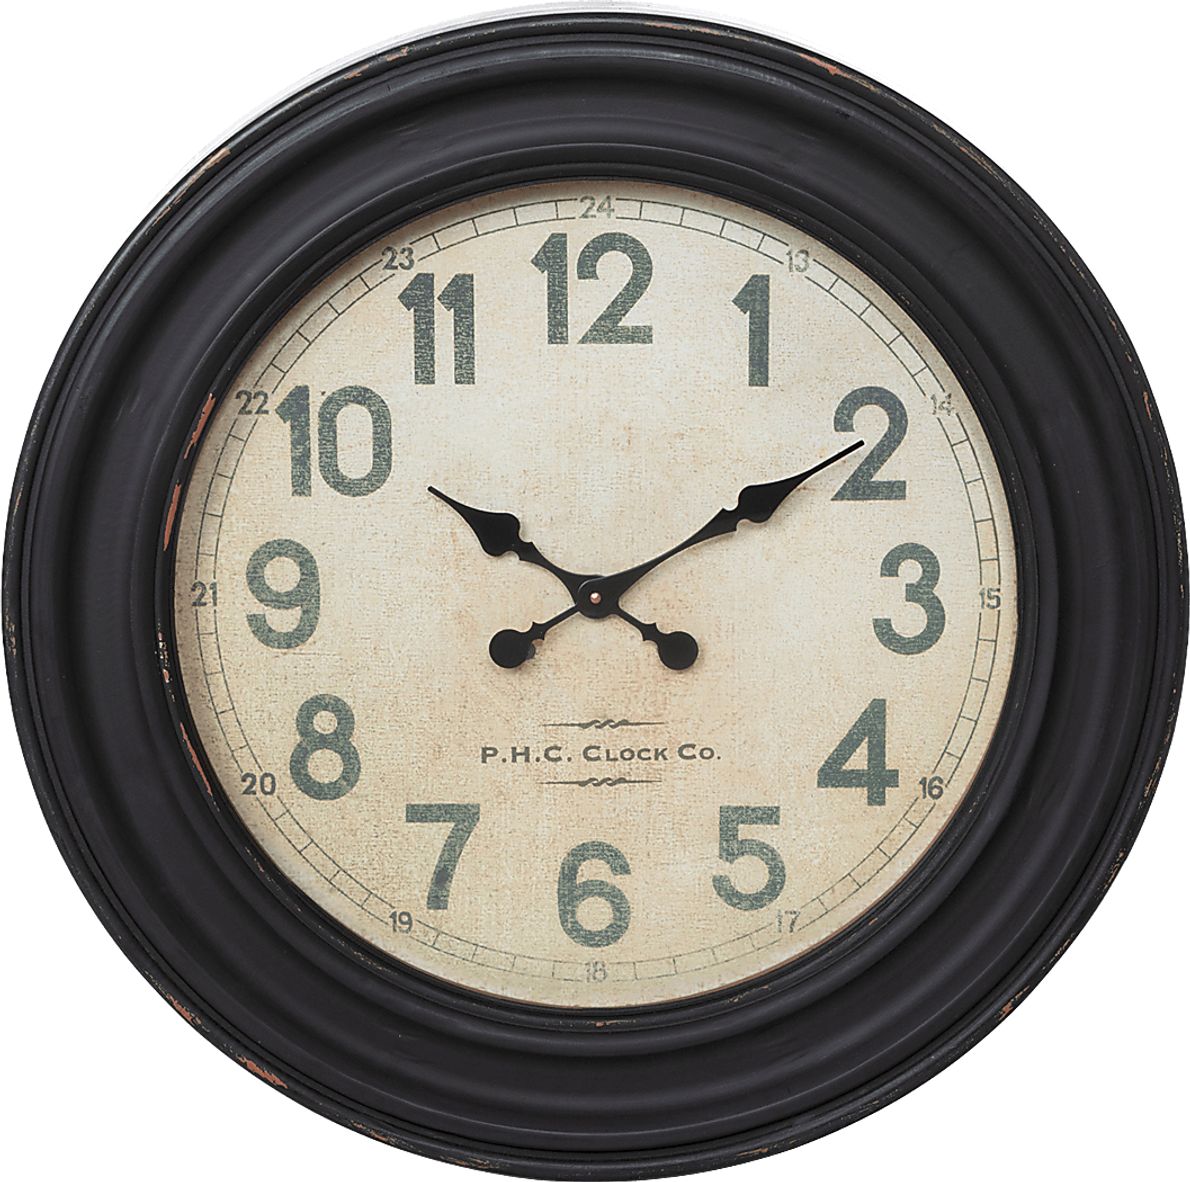 Bitar Black Wall Clock